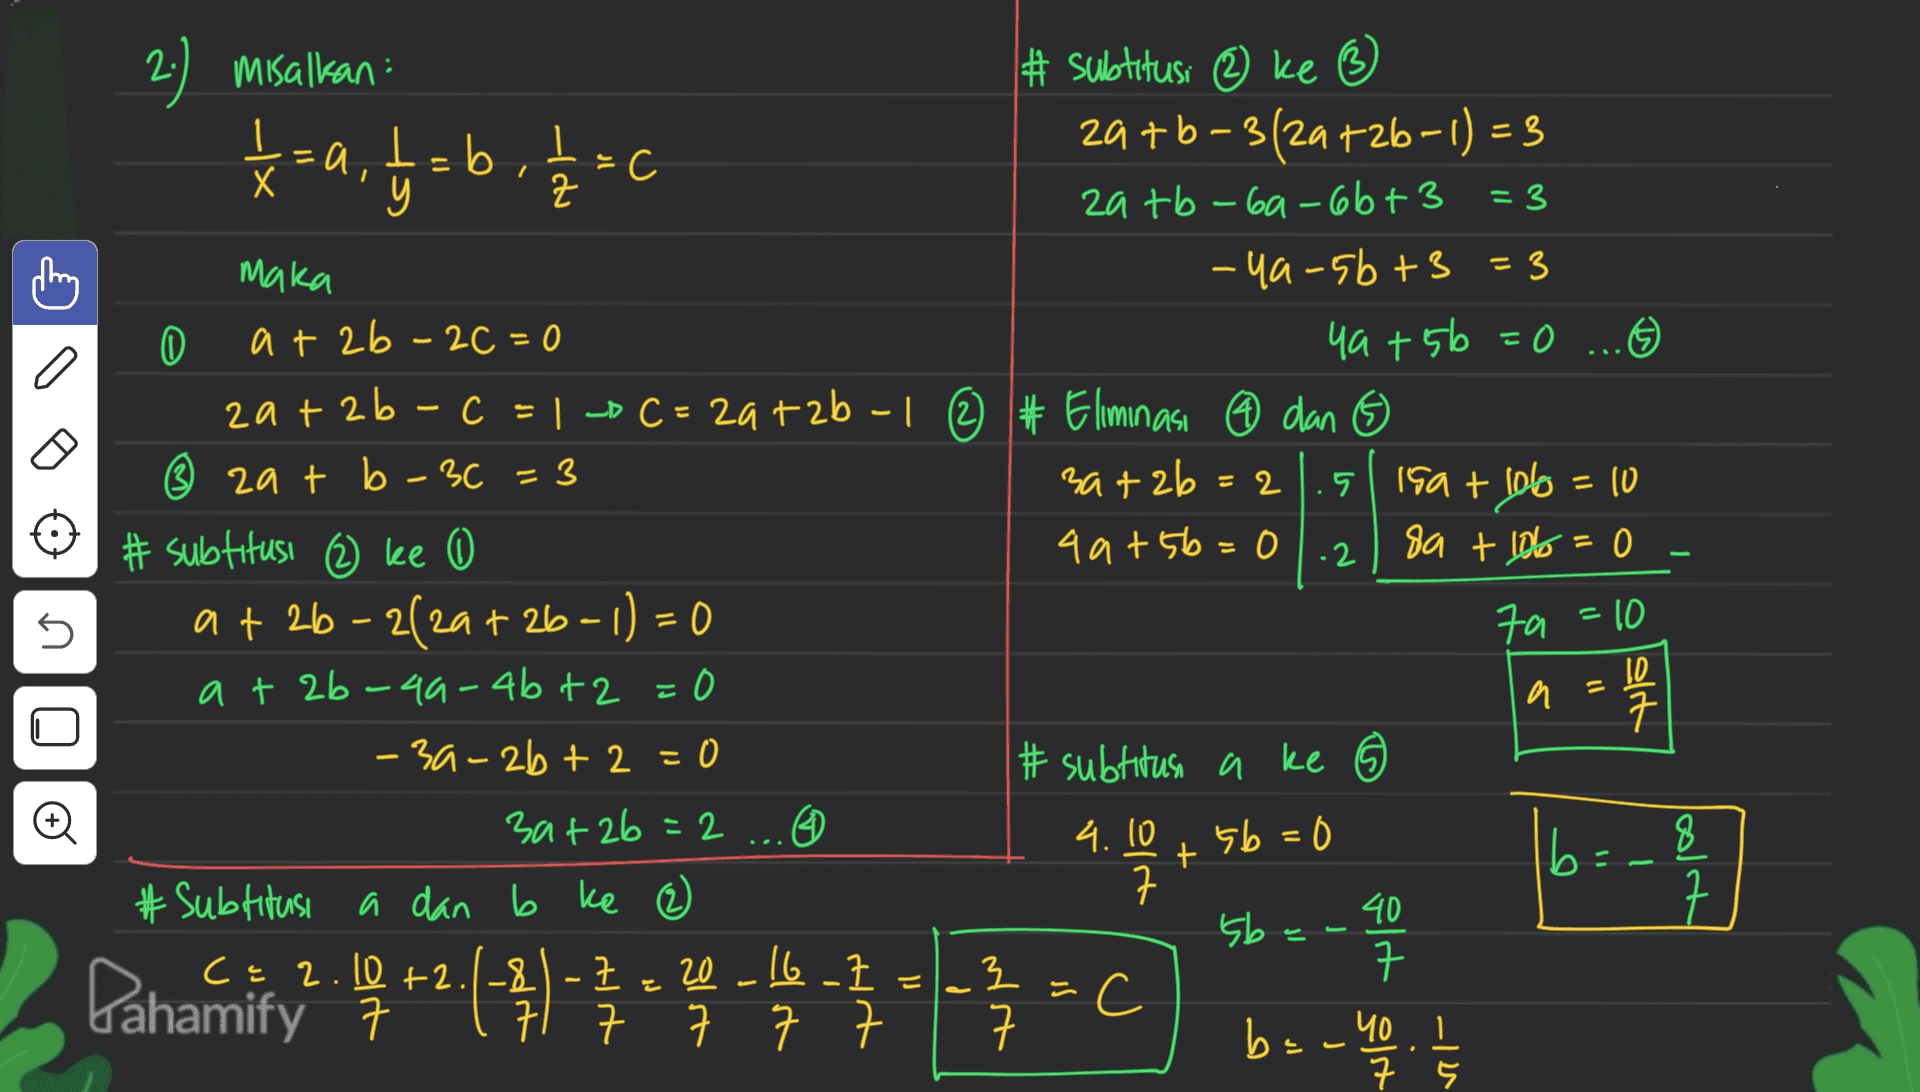 2: 1 = a, b = b. 12=0 а = maka a - = 2 9 2) misalkan : # subtitusi ② ke ③ -= tebi 2a +6-3(2a +26-1) = 3 х С y zatb-6a-66+3 = 3 -ya-5b +3 = 3 0 at2b-2C=0 4a + 5b =0 ... 2a + 26 - C = 1 -O C= 2a + 2b - 1 ☺ # Eliminası © dan 5 6 ② zat b-36 = 3 30+2b=2 15a + 106 = 10 # subtitusi (2) ke 0 4 at 5b=01.2 89 + 16 = 0 - at 26-2(2a +26-1)=0 at 2b-4a-4b +2 =0 0 a 구 - 34 - 26 + 2 = 0 # subtitus a ke 6 Bat2b = 2 4 4.10 5b=0 8 + # Subtitusi a dan b ke 2 40 ce 2.10+2.1-8 크 20_16-7 로 구 ㅋ - С 71 ㅋ ㅋ 구 구 ㅋ bach 7 s s a = 10 10 11 # b O و طها - I = Pahamify : 7 il Il d baayo. I 구 